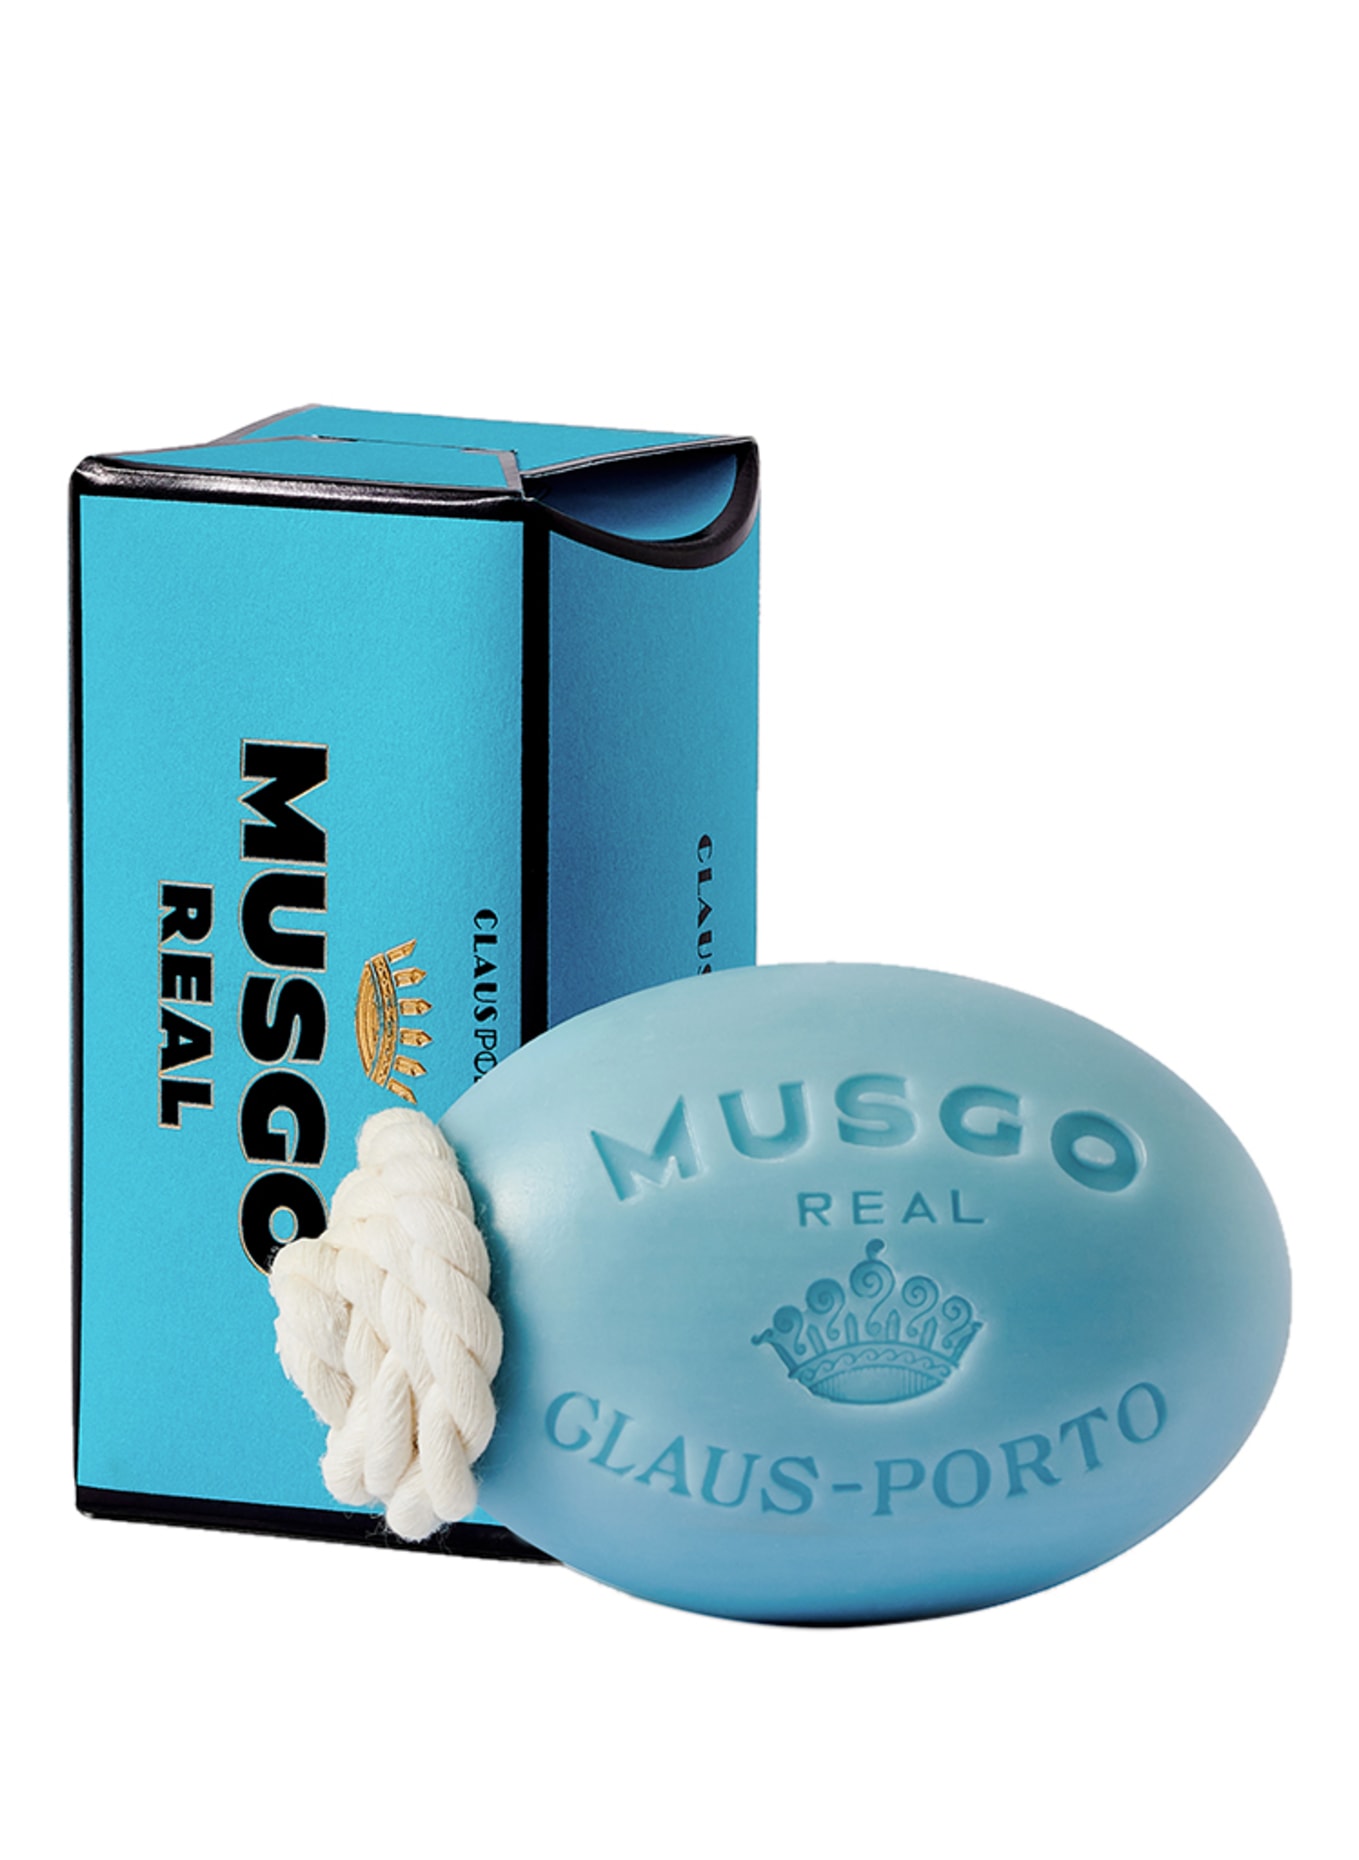 CLAUS PORTO MUSGO REAL ALTO MAR SOAP ON A ROPE (Obrazek 1)